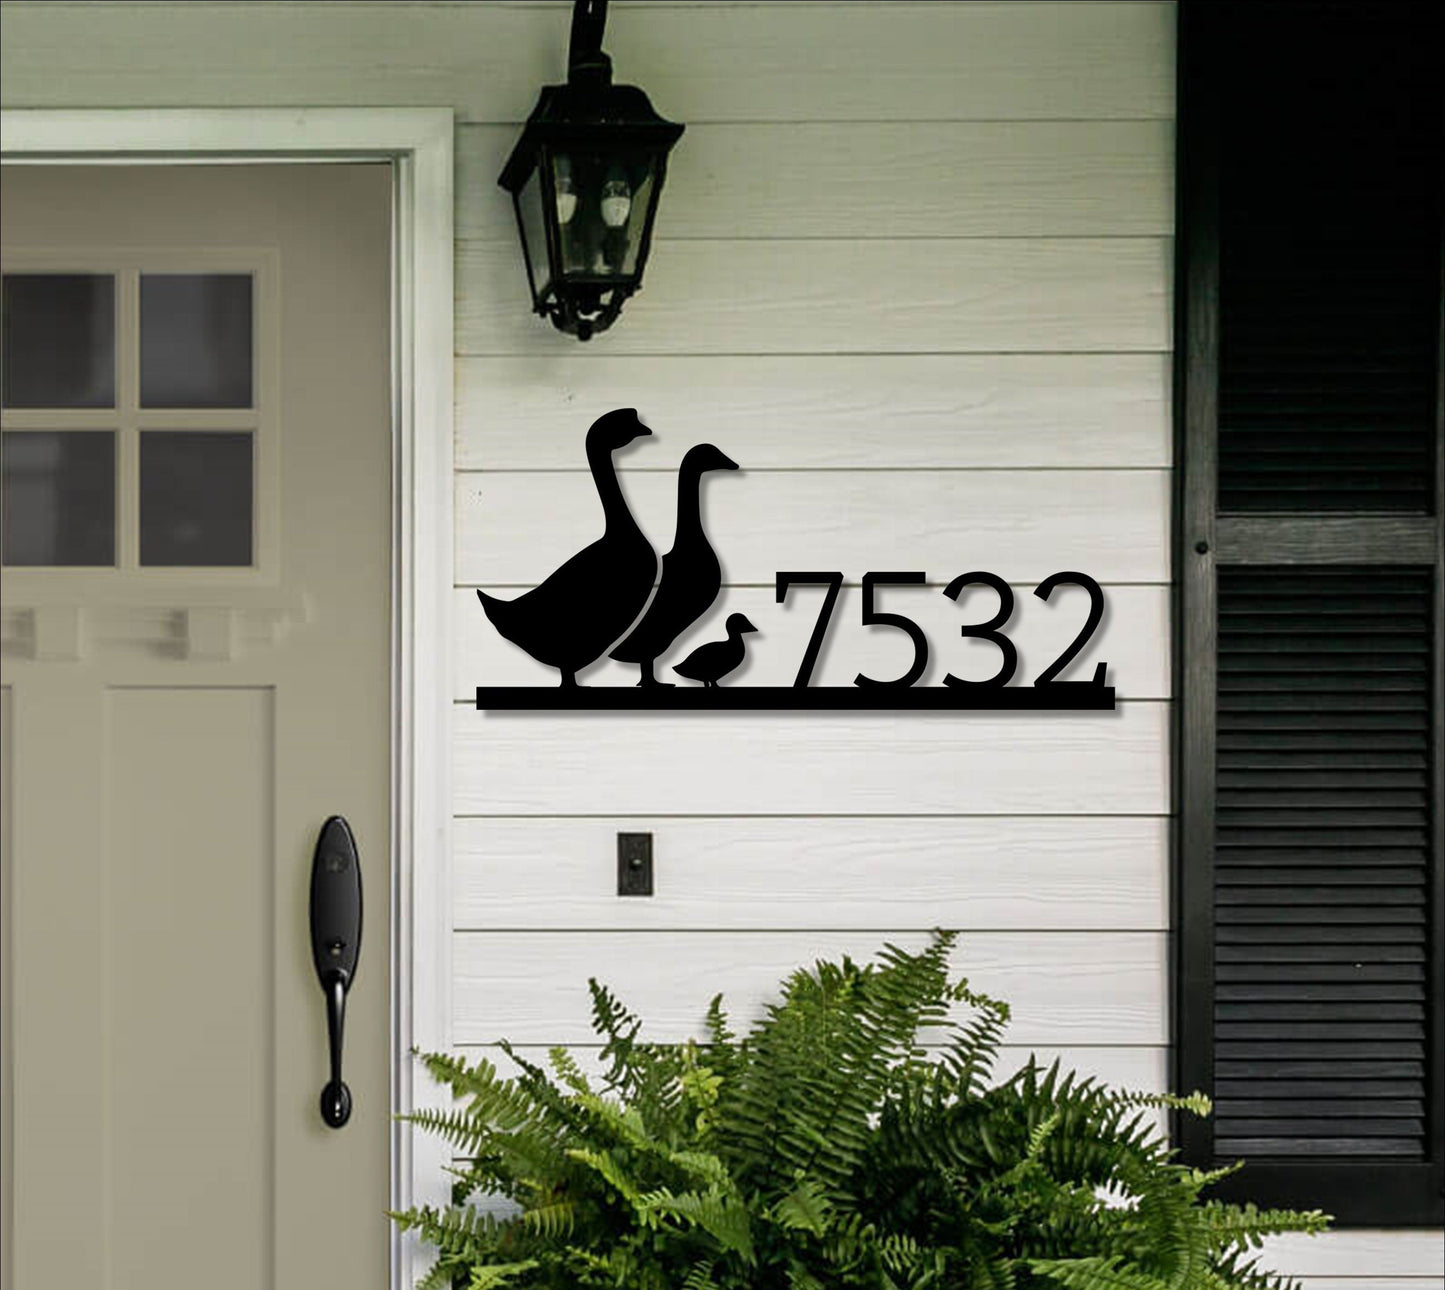 Custom Duck And Ducklings Metal Sign - Custom Metal Address Sign - Custom Address Sign Farm Address Sign